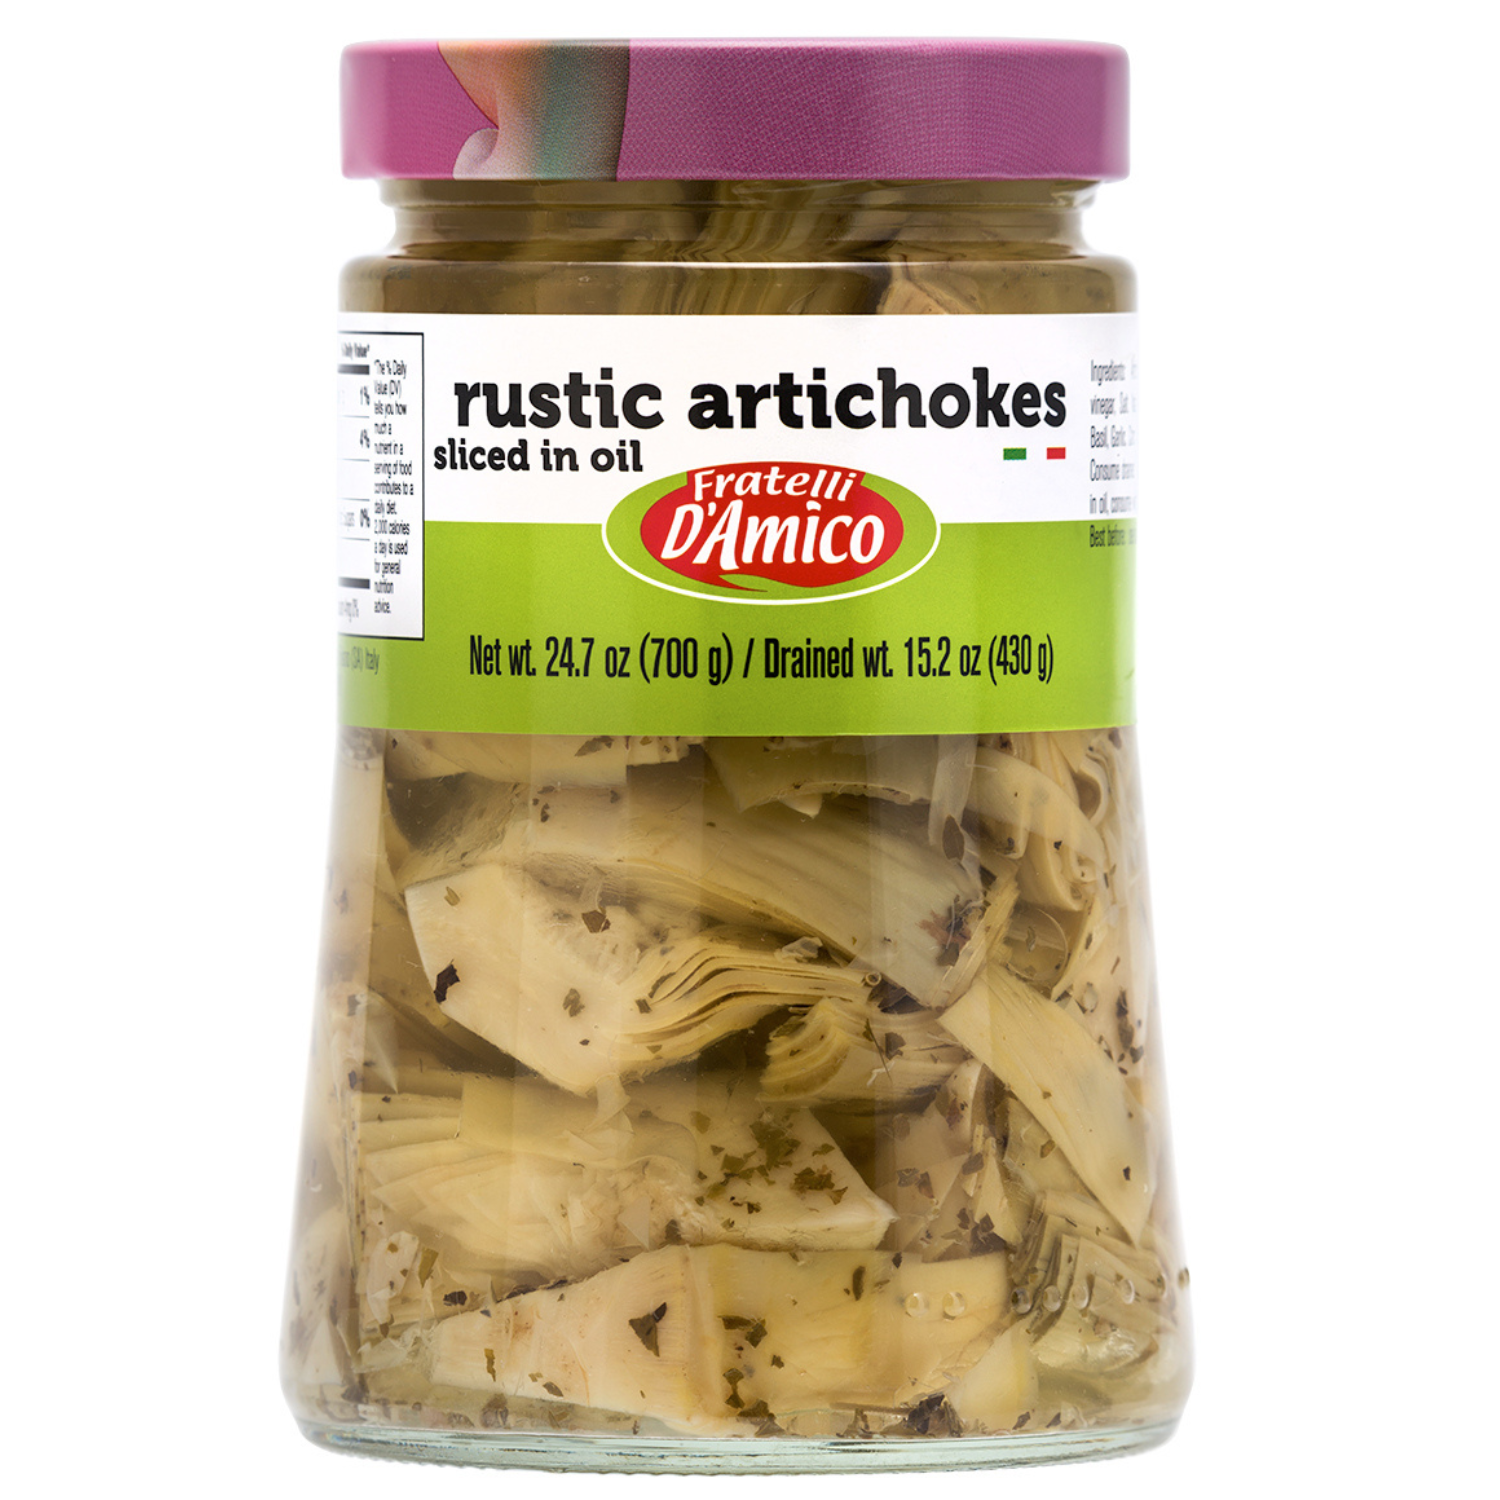 Rustic Artichoke Sliced in oil, Large Jar: 24.7oz (700 g)